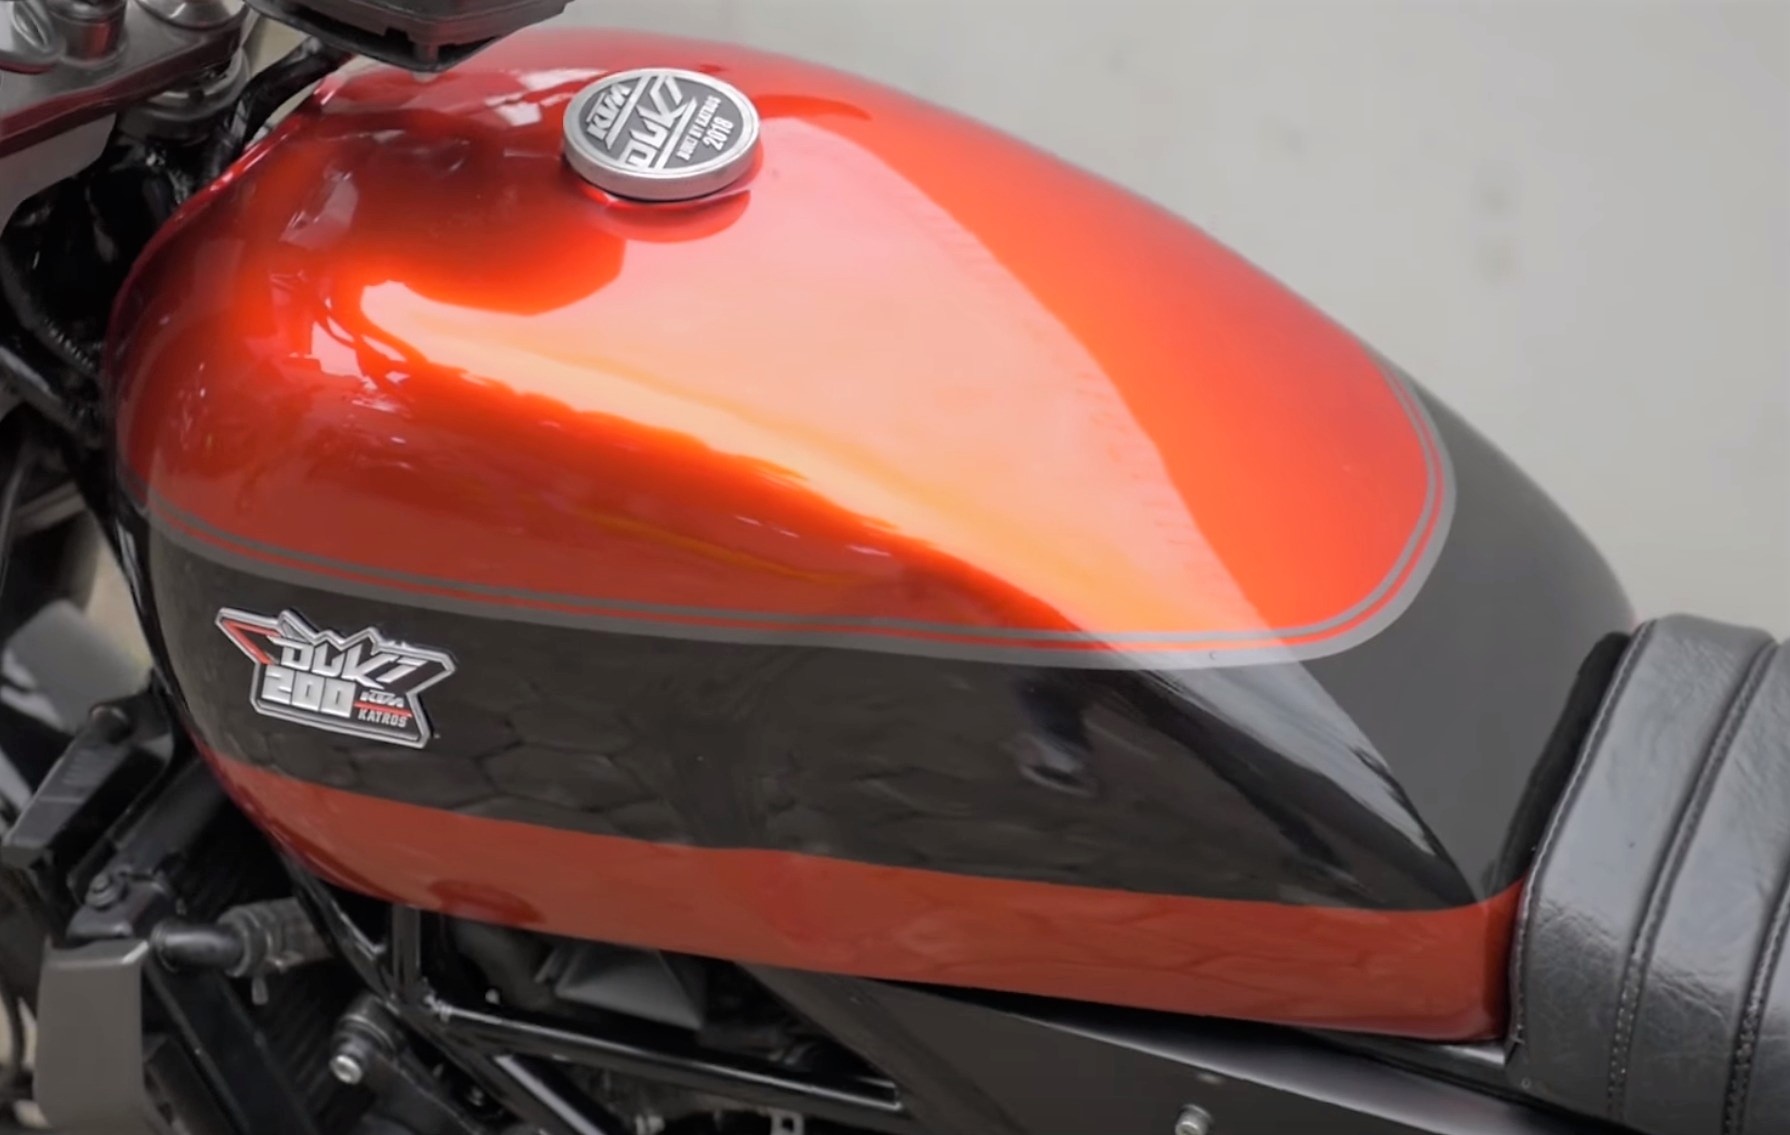 Meet Awesomely Customized KTM Duke 200 by Atenx Katros - shot